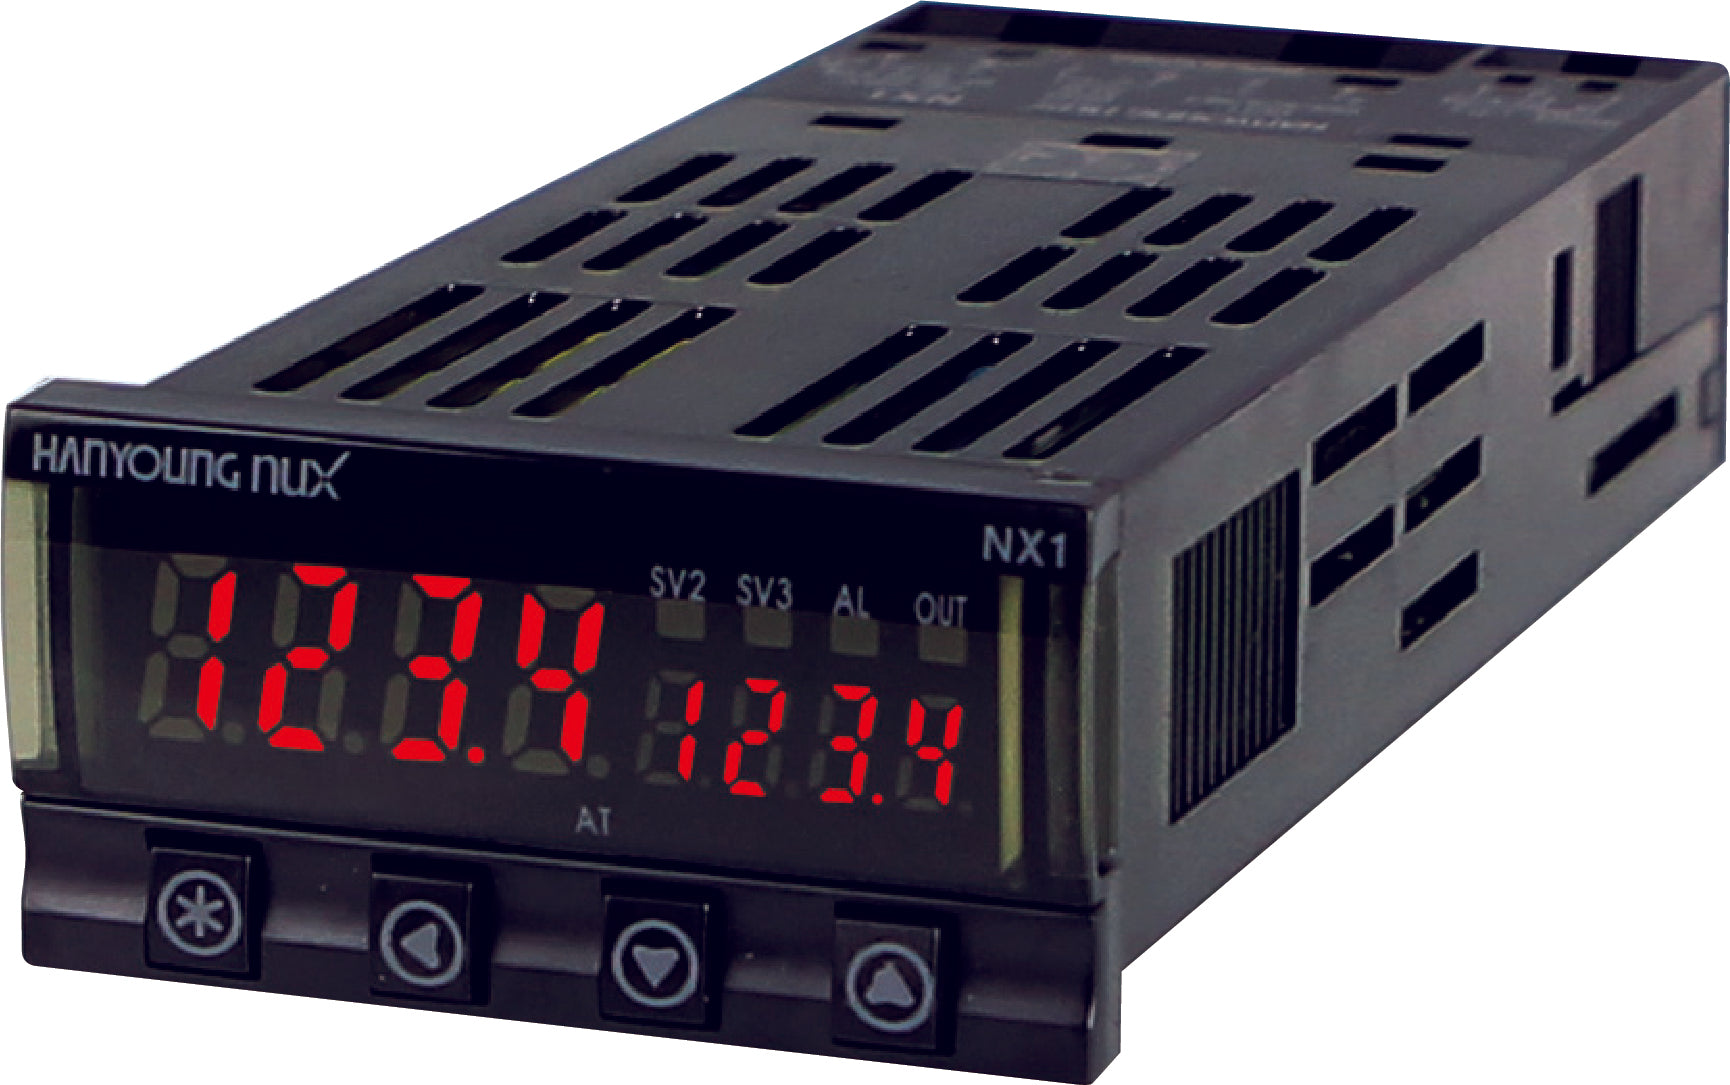 BK3-P1, Indicator, 48x24mm, 100-240VAC, Pt100 RTD Input, -199.0-600 Deg C Display Range